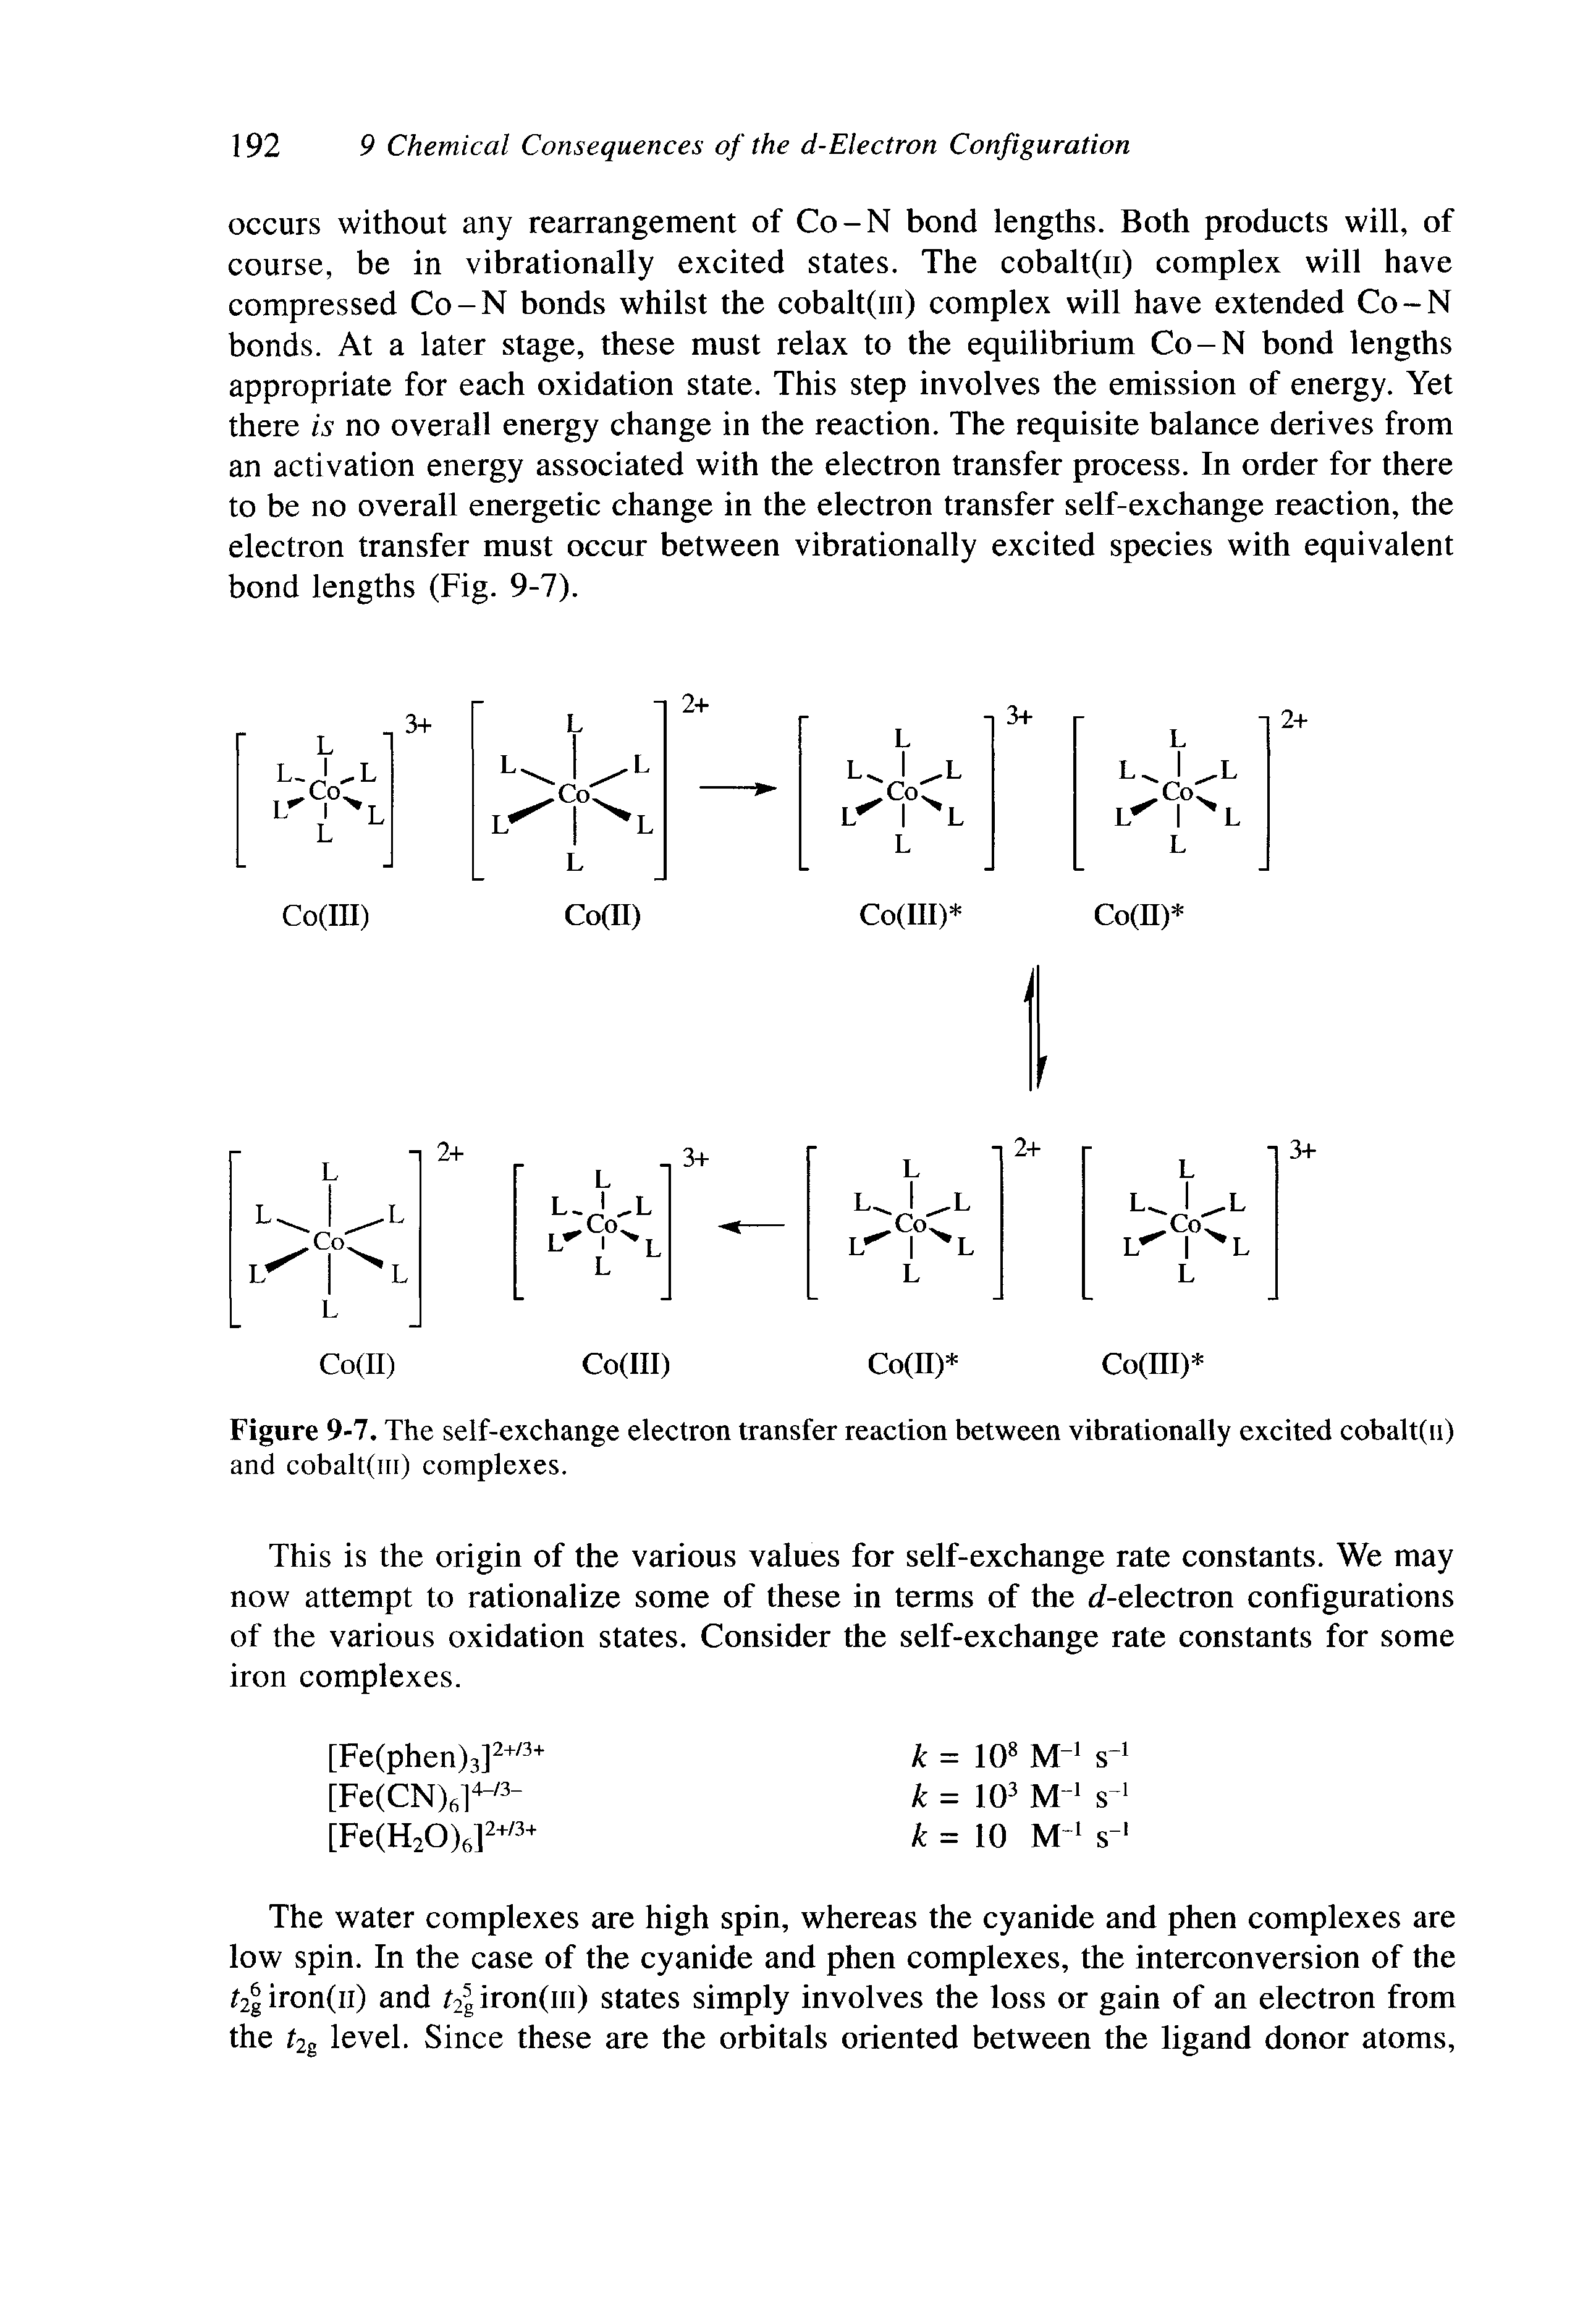 Figure 9-7. The self-exchange electron transfer reaction between vibrationally excited cobalt(ii) and cobalt(iii) complexes.